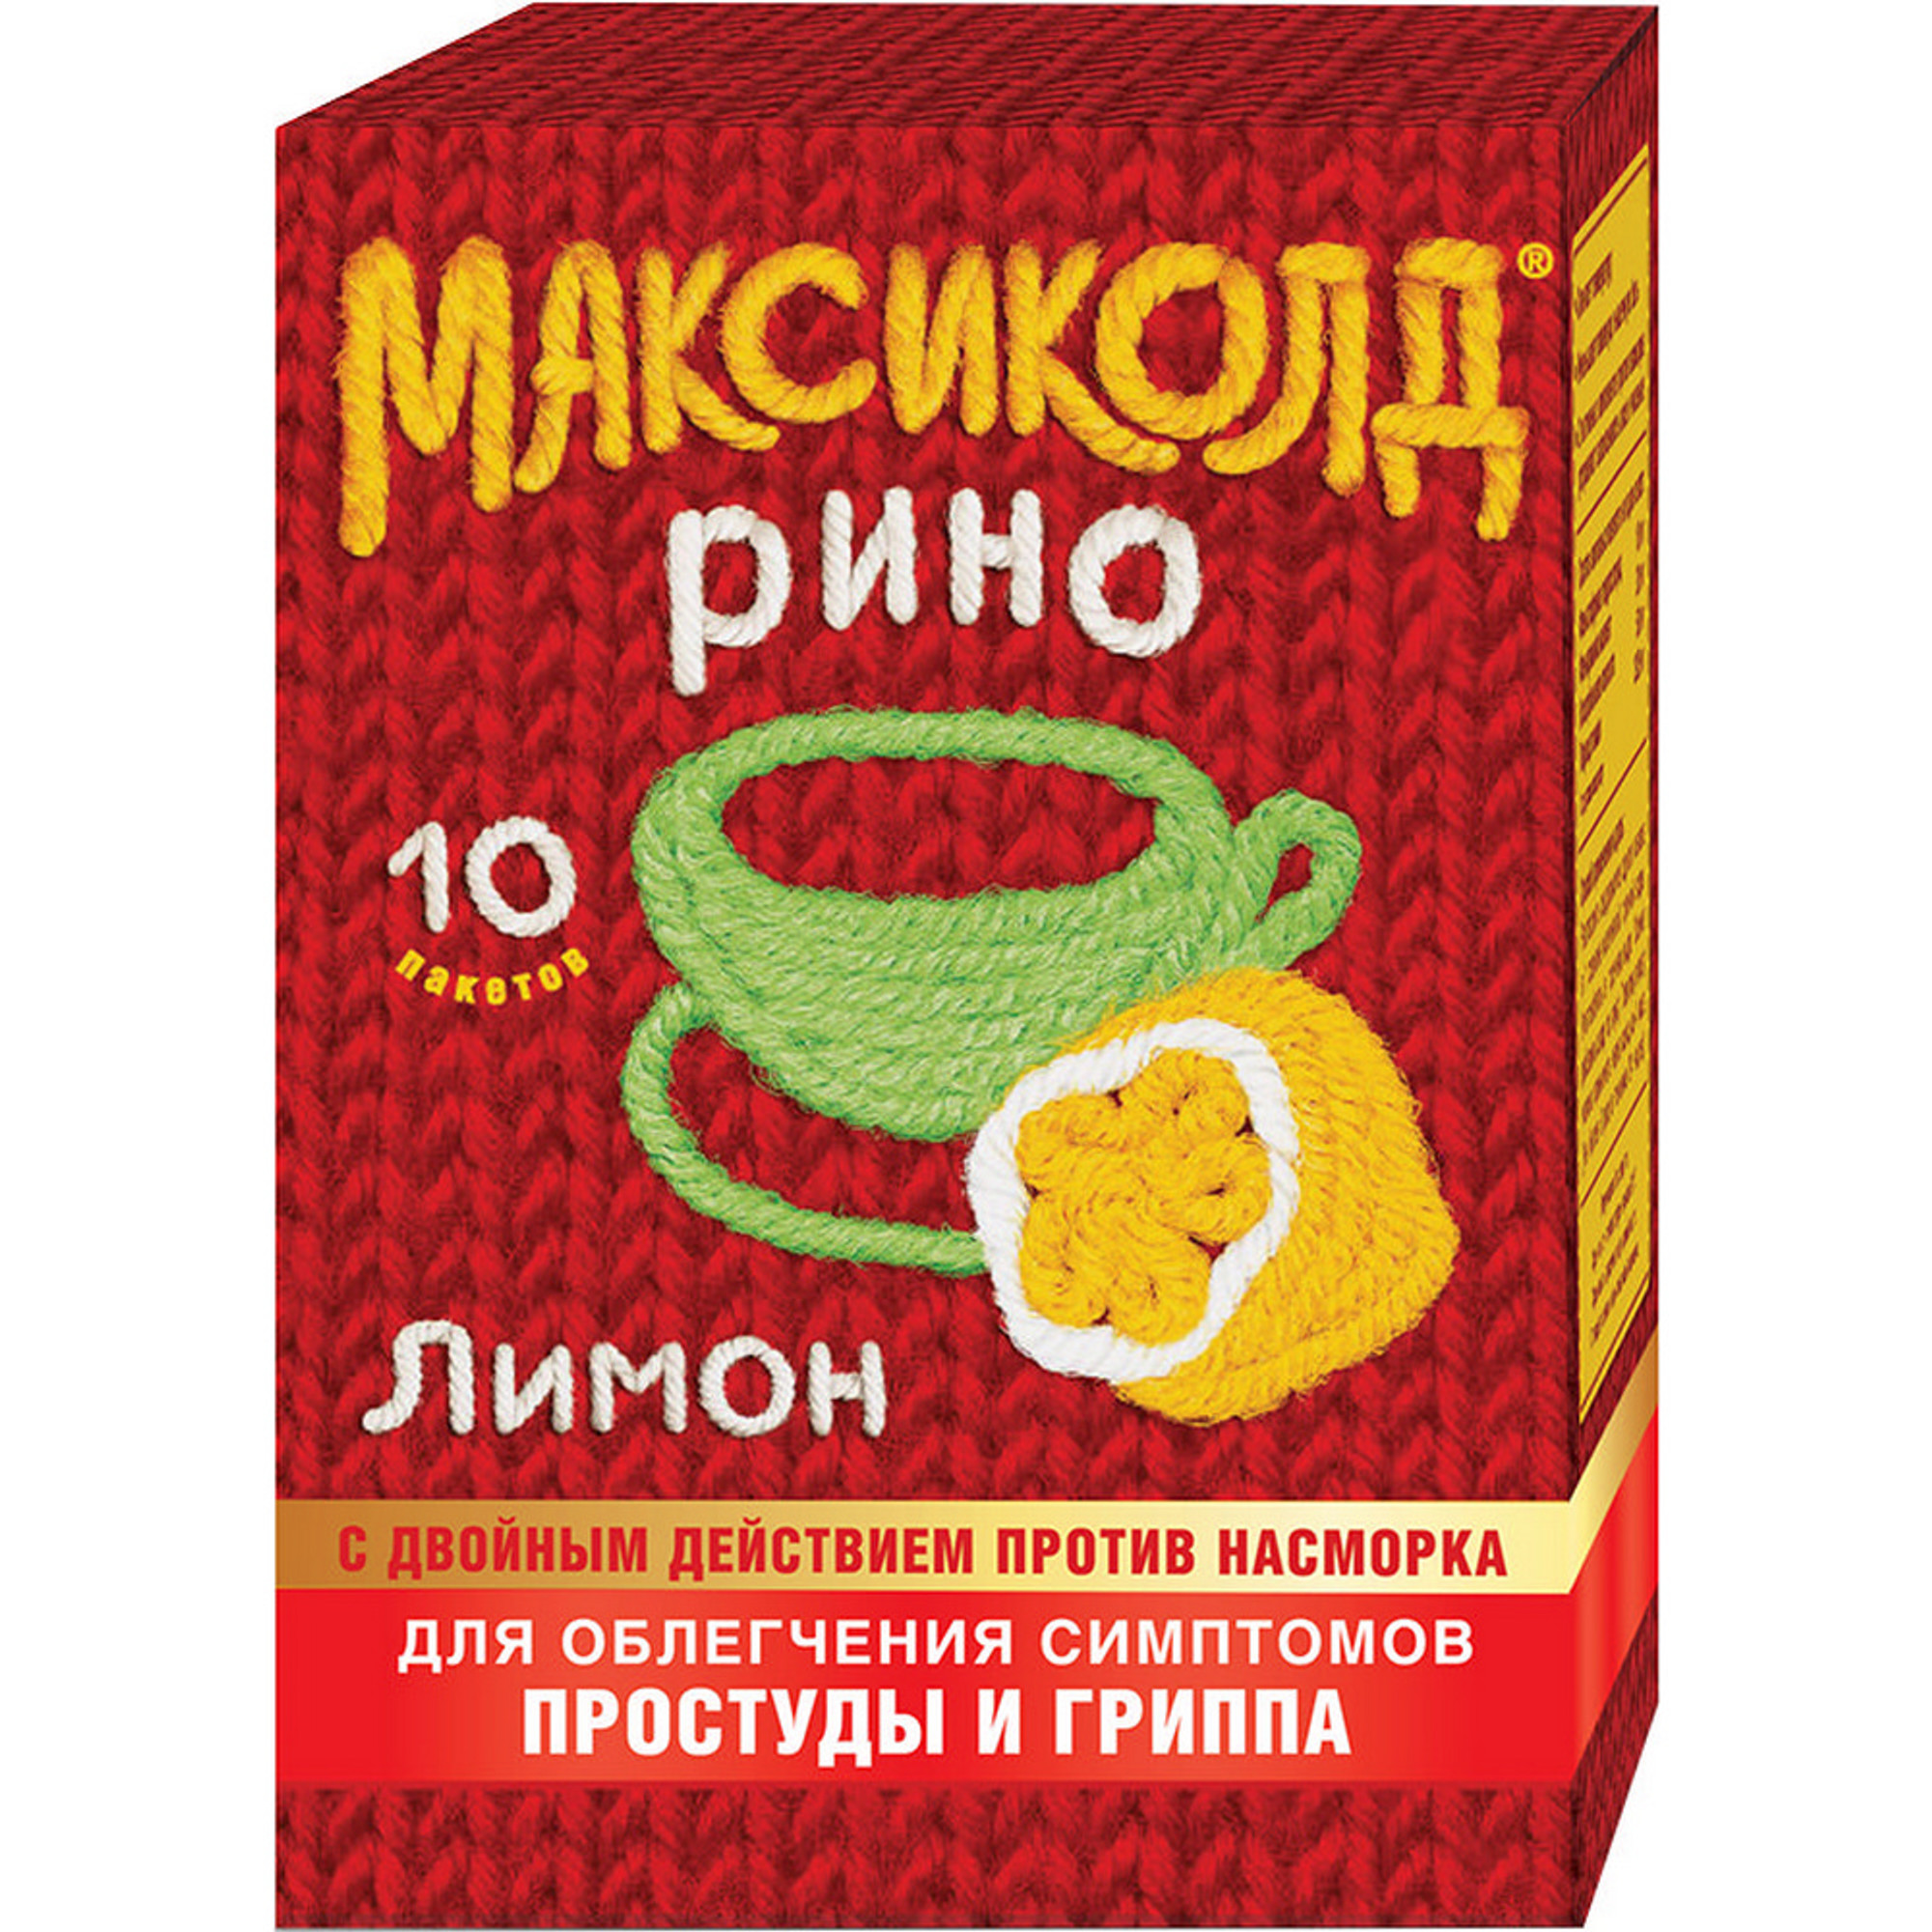 Максиколд Рино, порошок (лимон), пакетики 15 г, 10 шт. витастронг флориоза порошок пакетики 7 г 10 шт